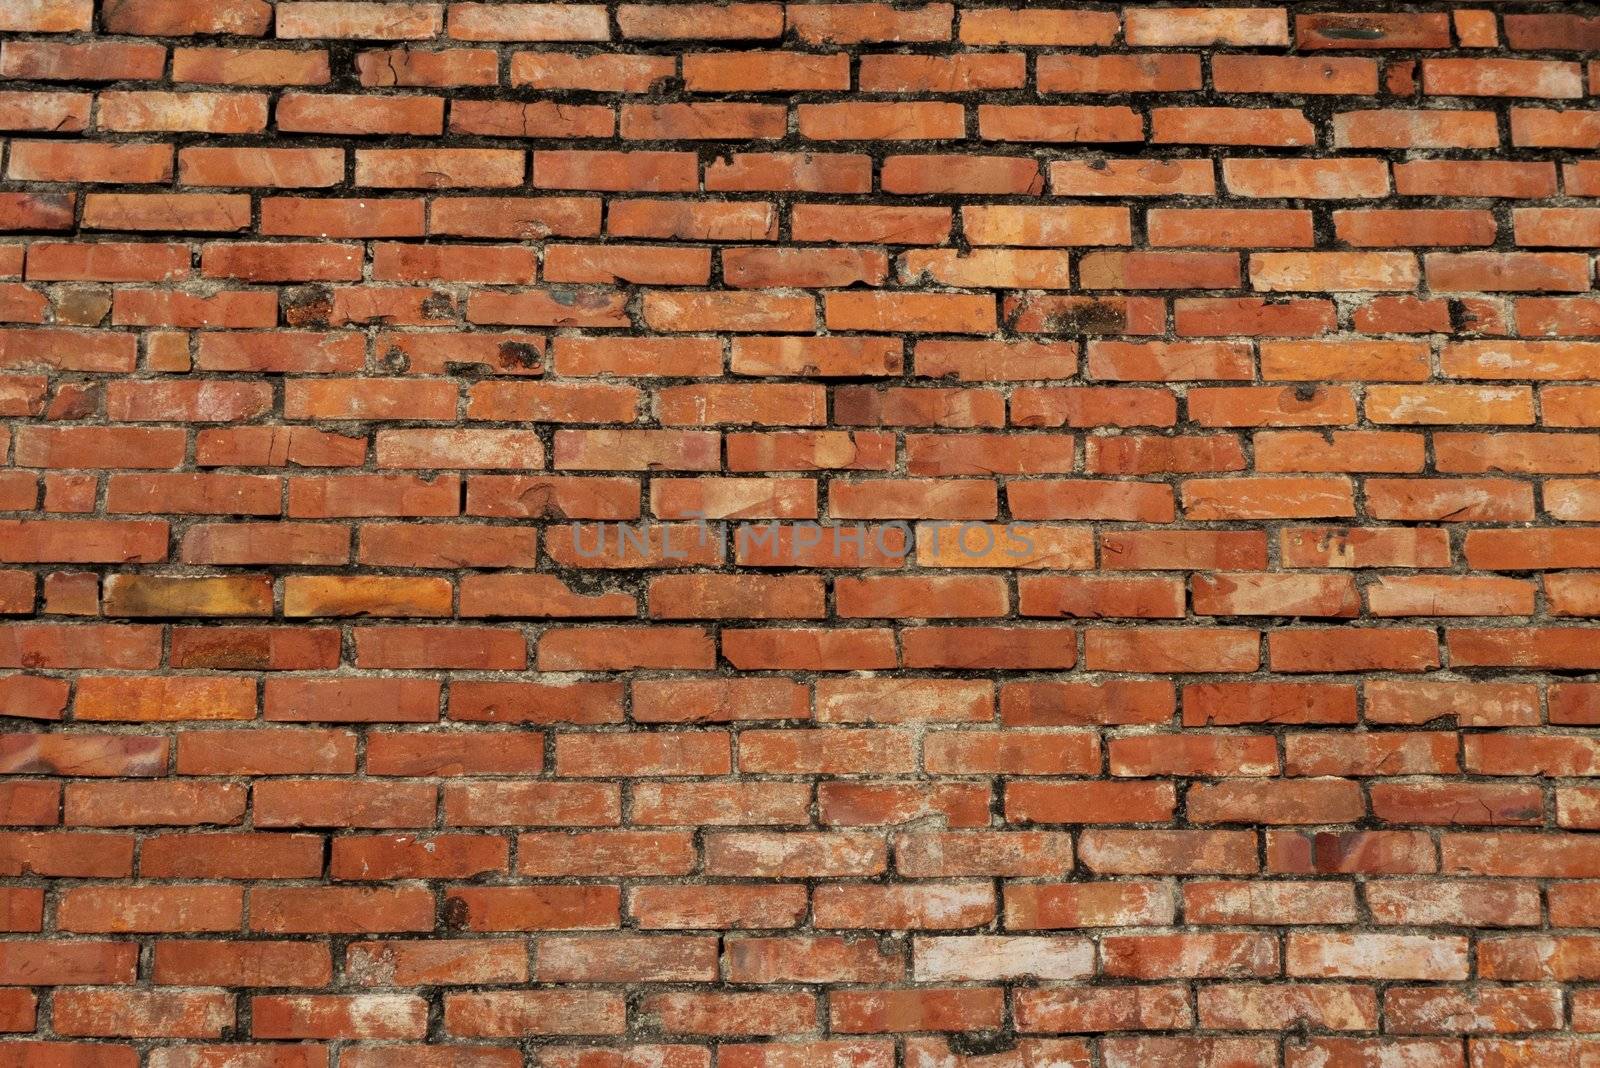 Brick Wall by hsin0407